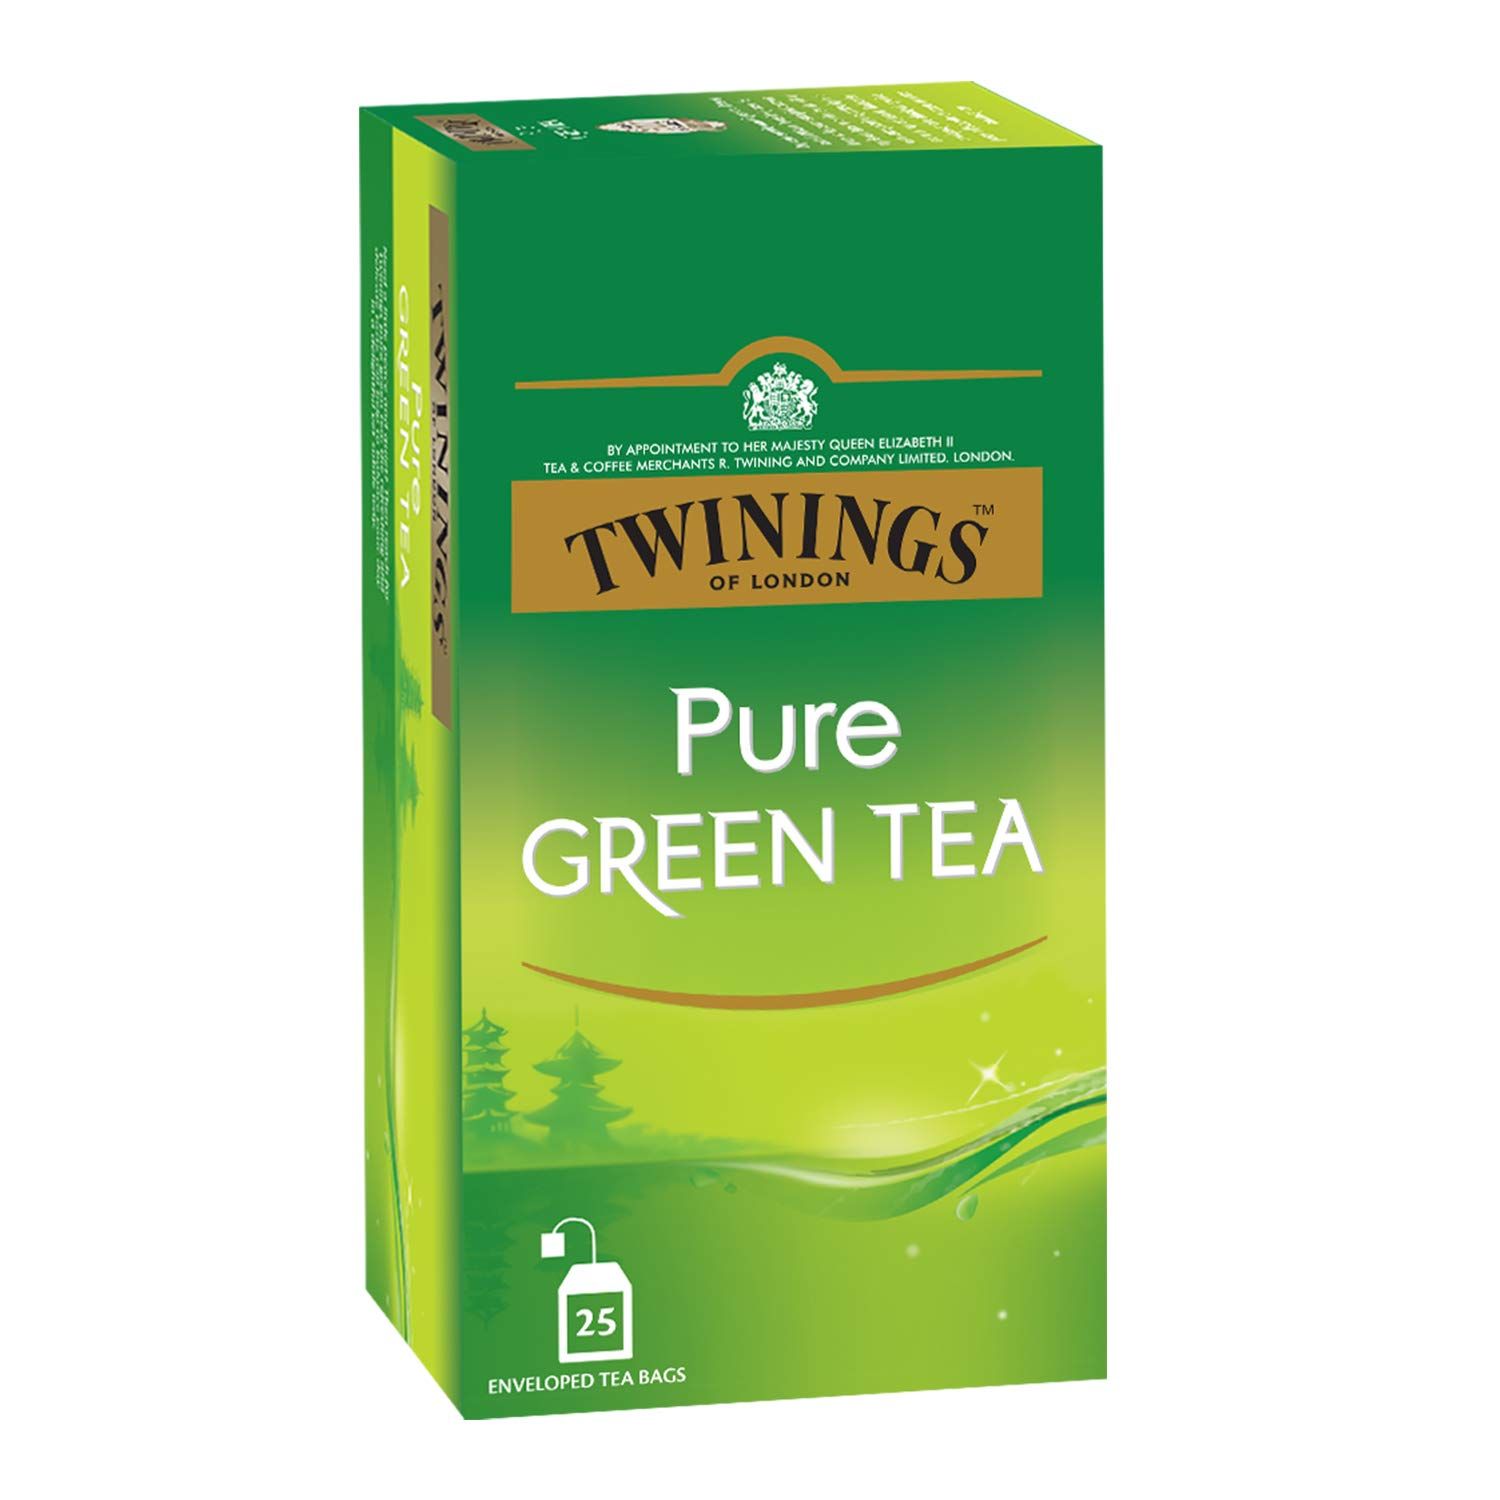 Twinings Pure Green Tea Image